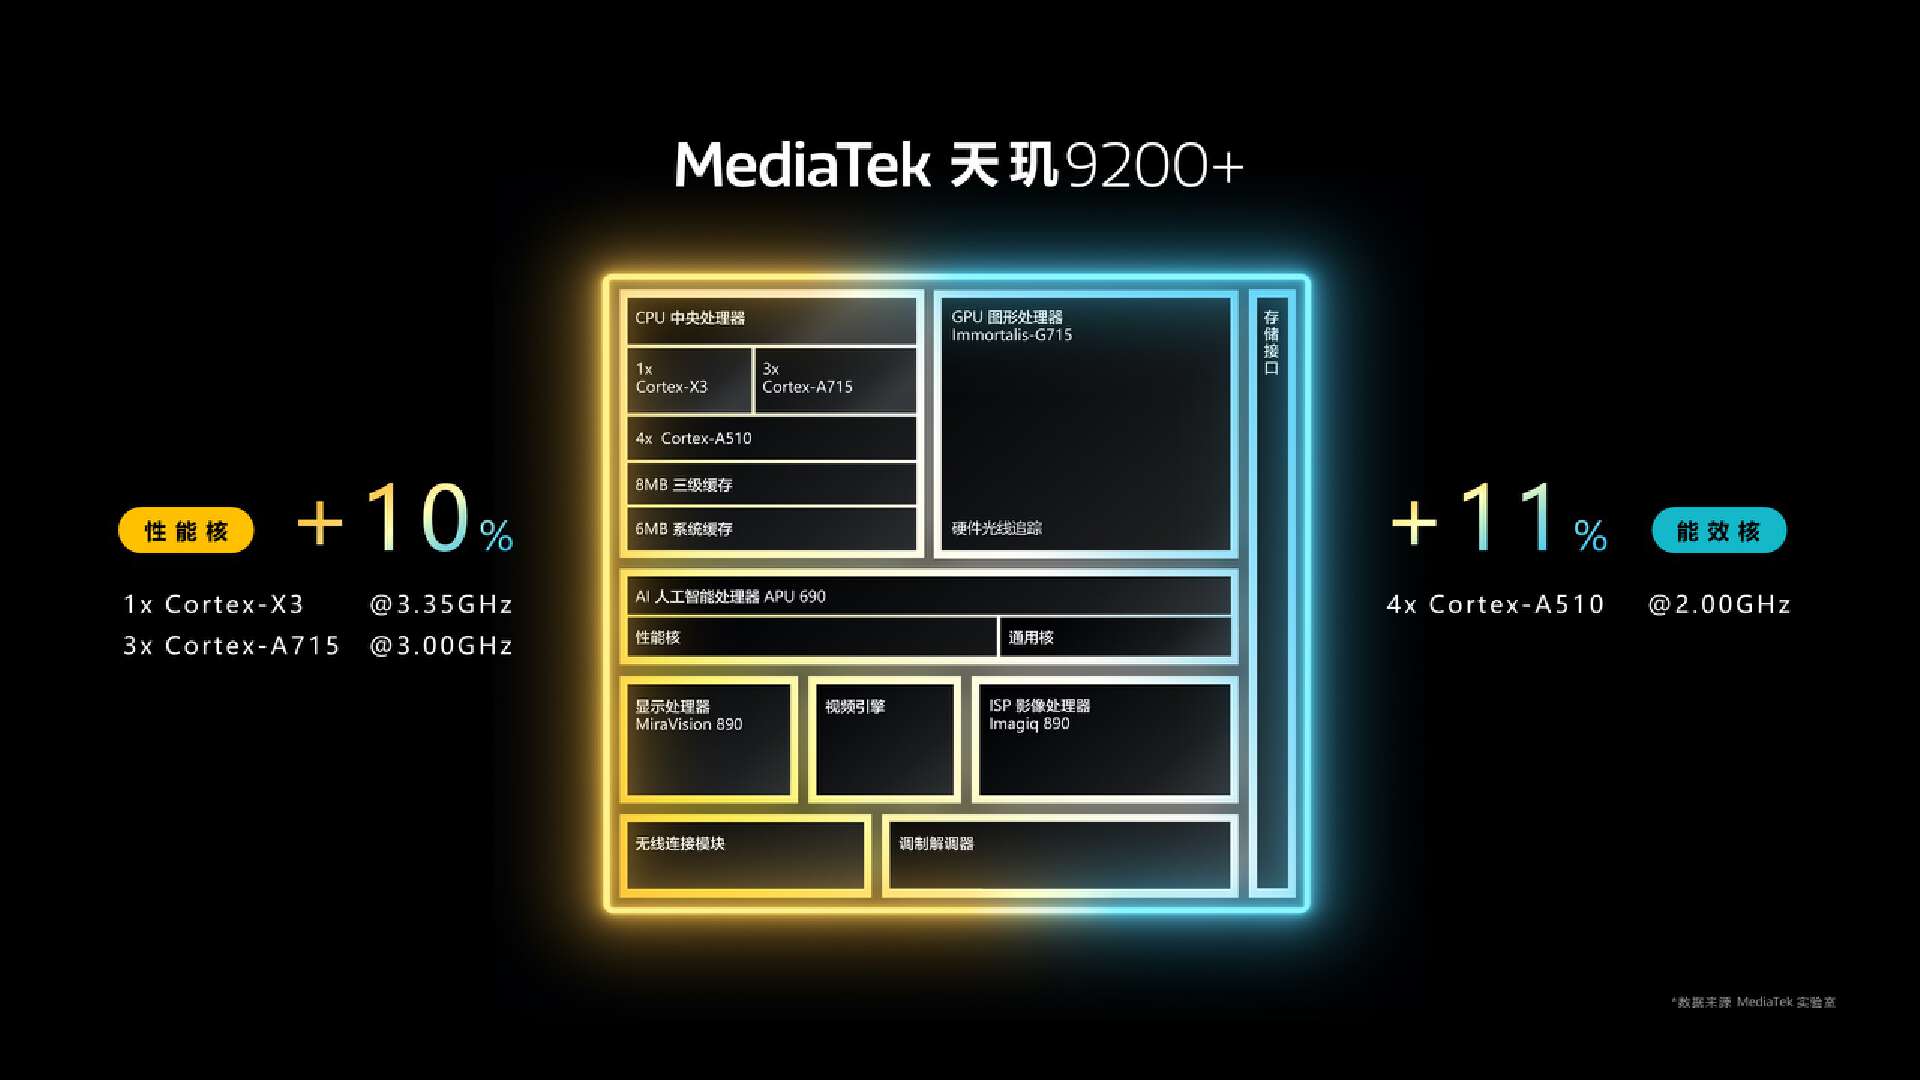 MediaTek天玑9200+5G移动芯片正式发布，性能、能效、游戏体验全面升级-我爱音频网